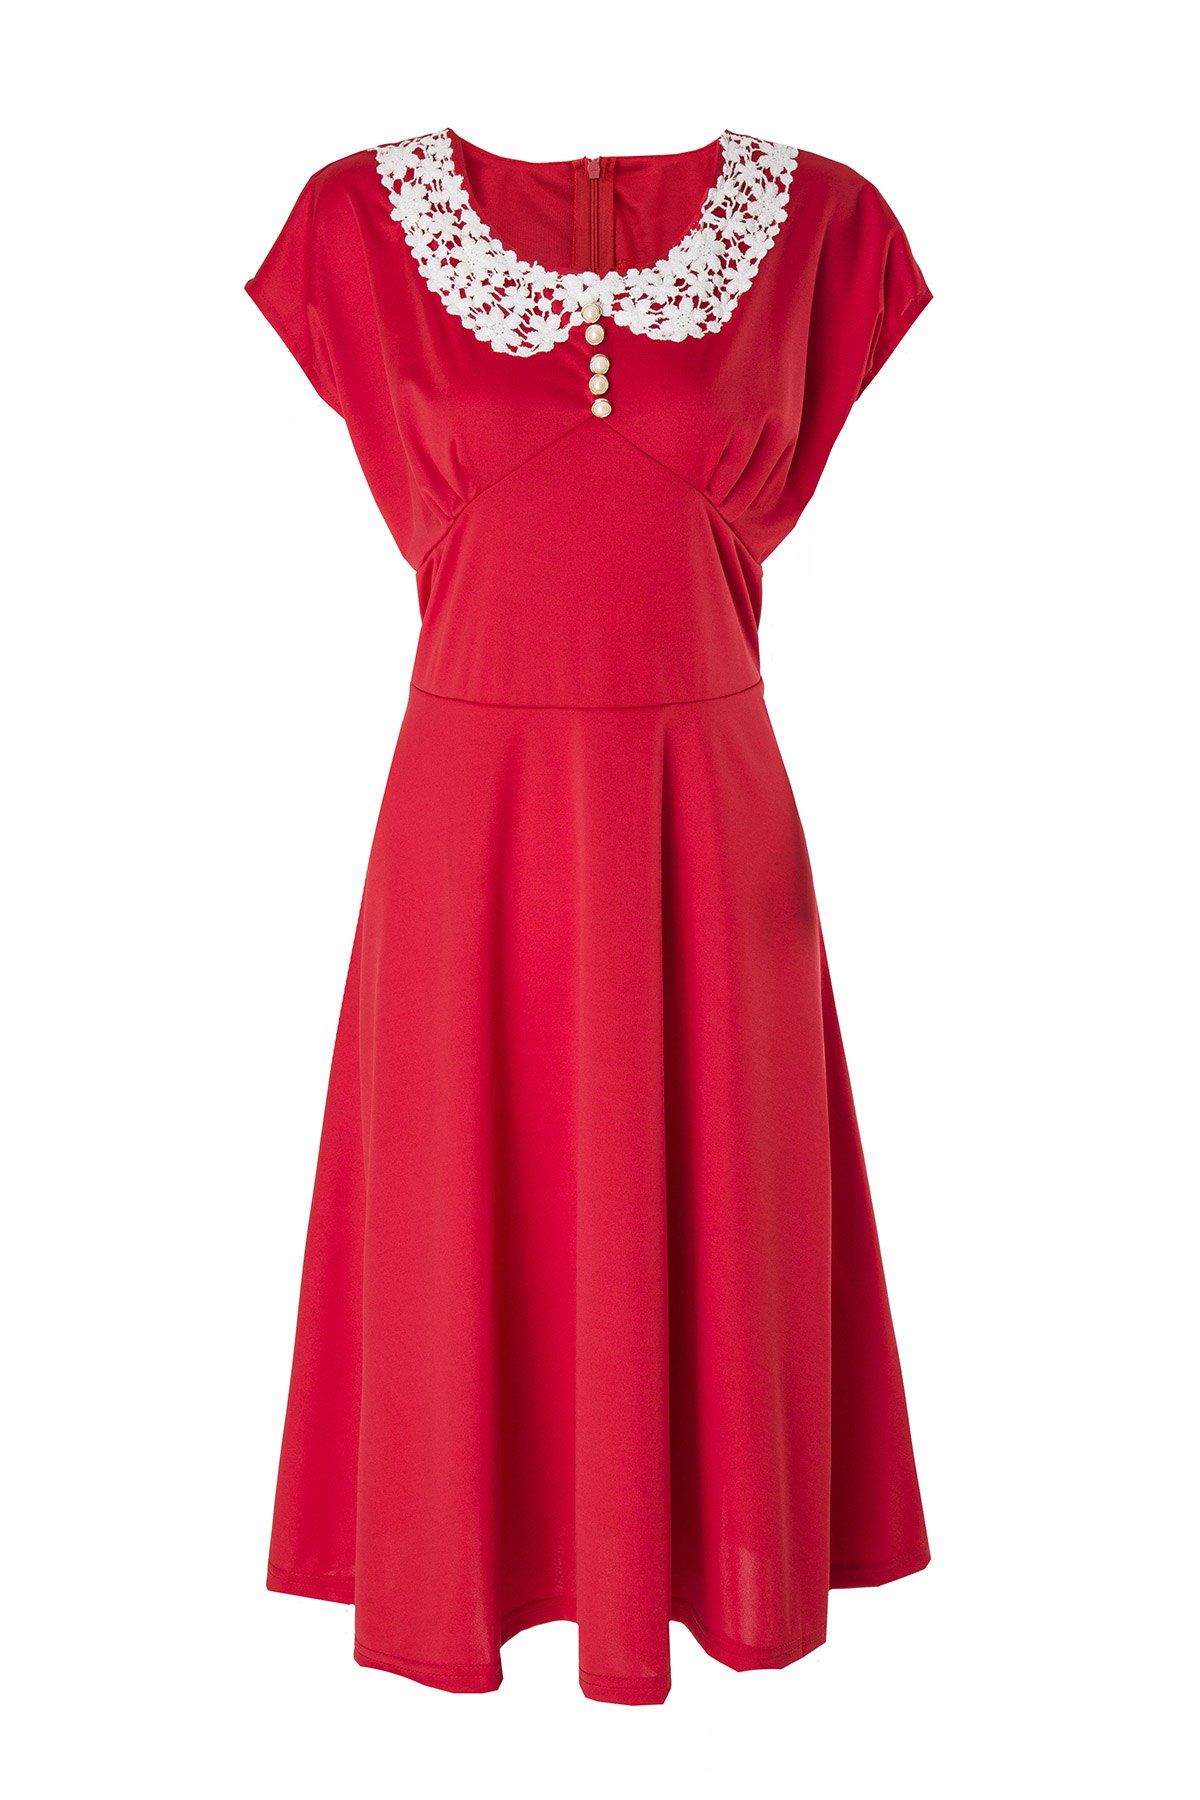 Vintage Cap Sleeve Peter Pan Collar Lace Crochet Women's Dress - RED M